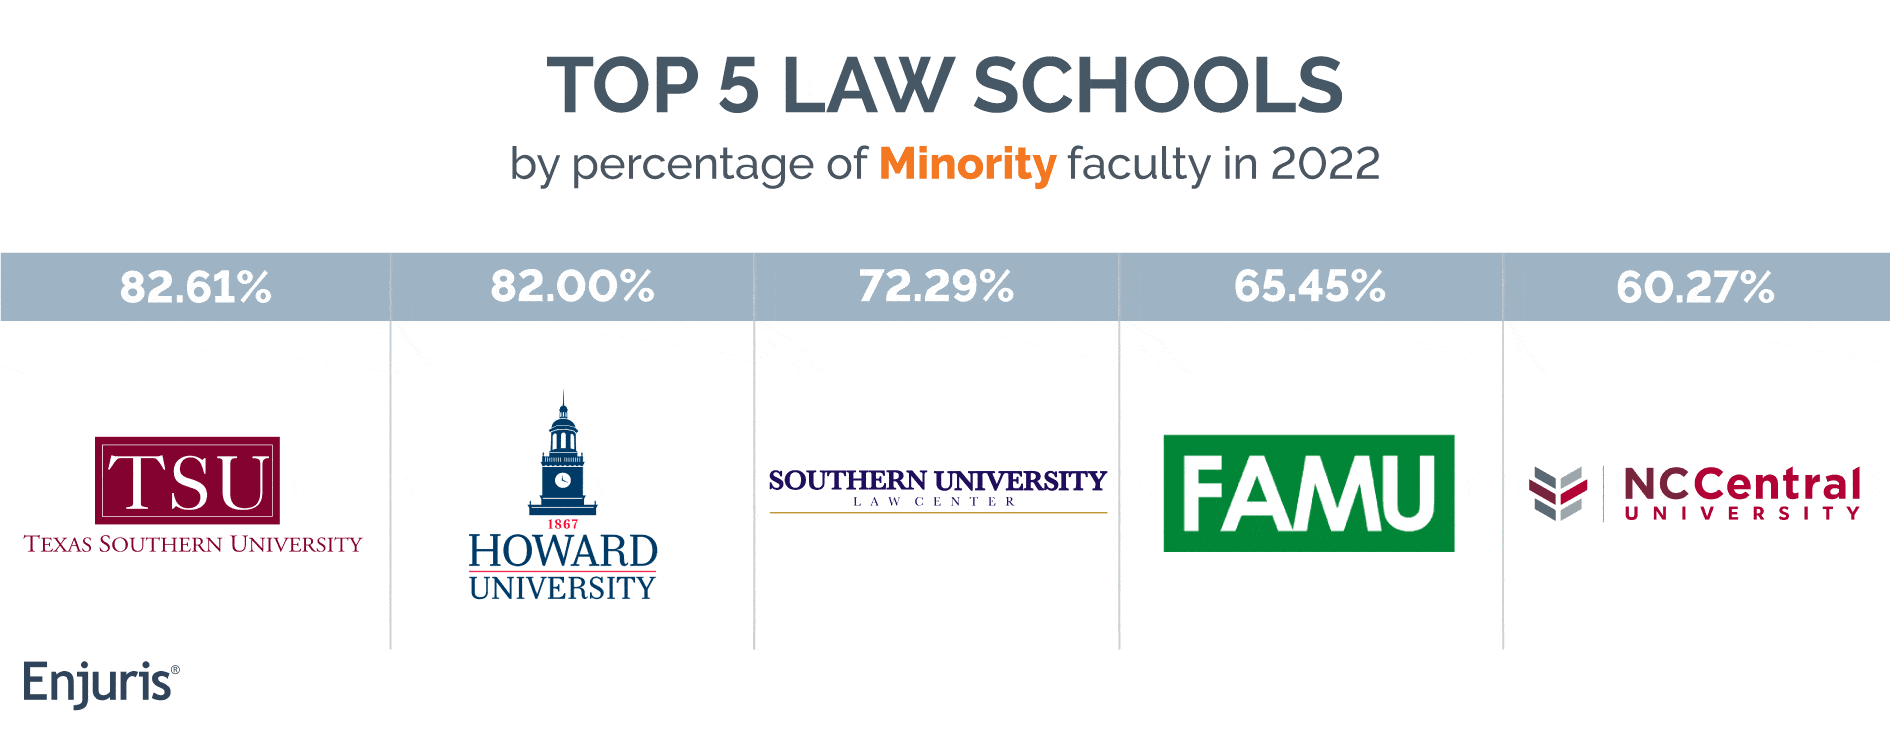 Top 5 law schools by percentage of minority faculty in 2022